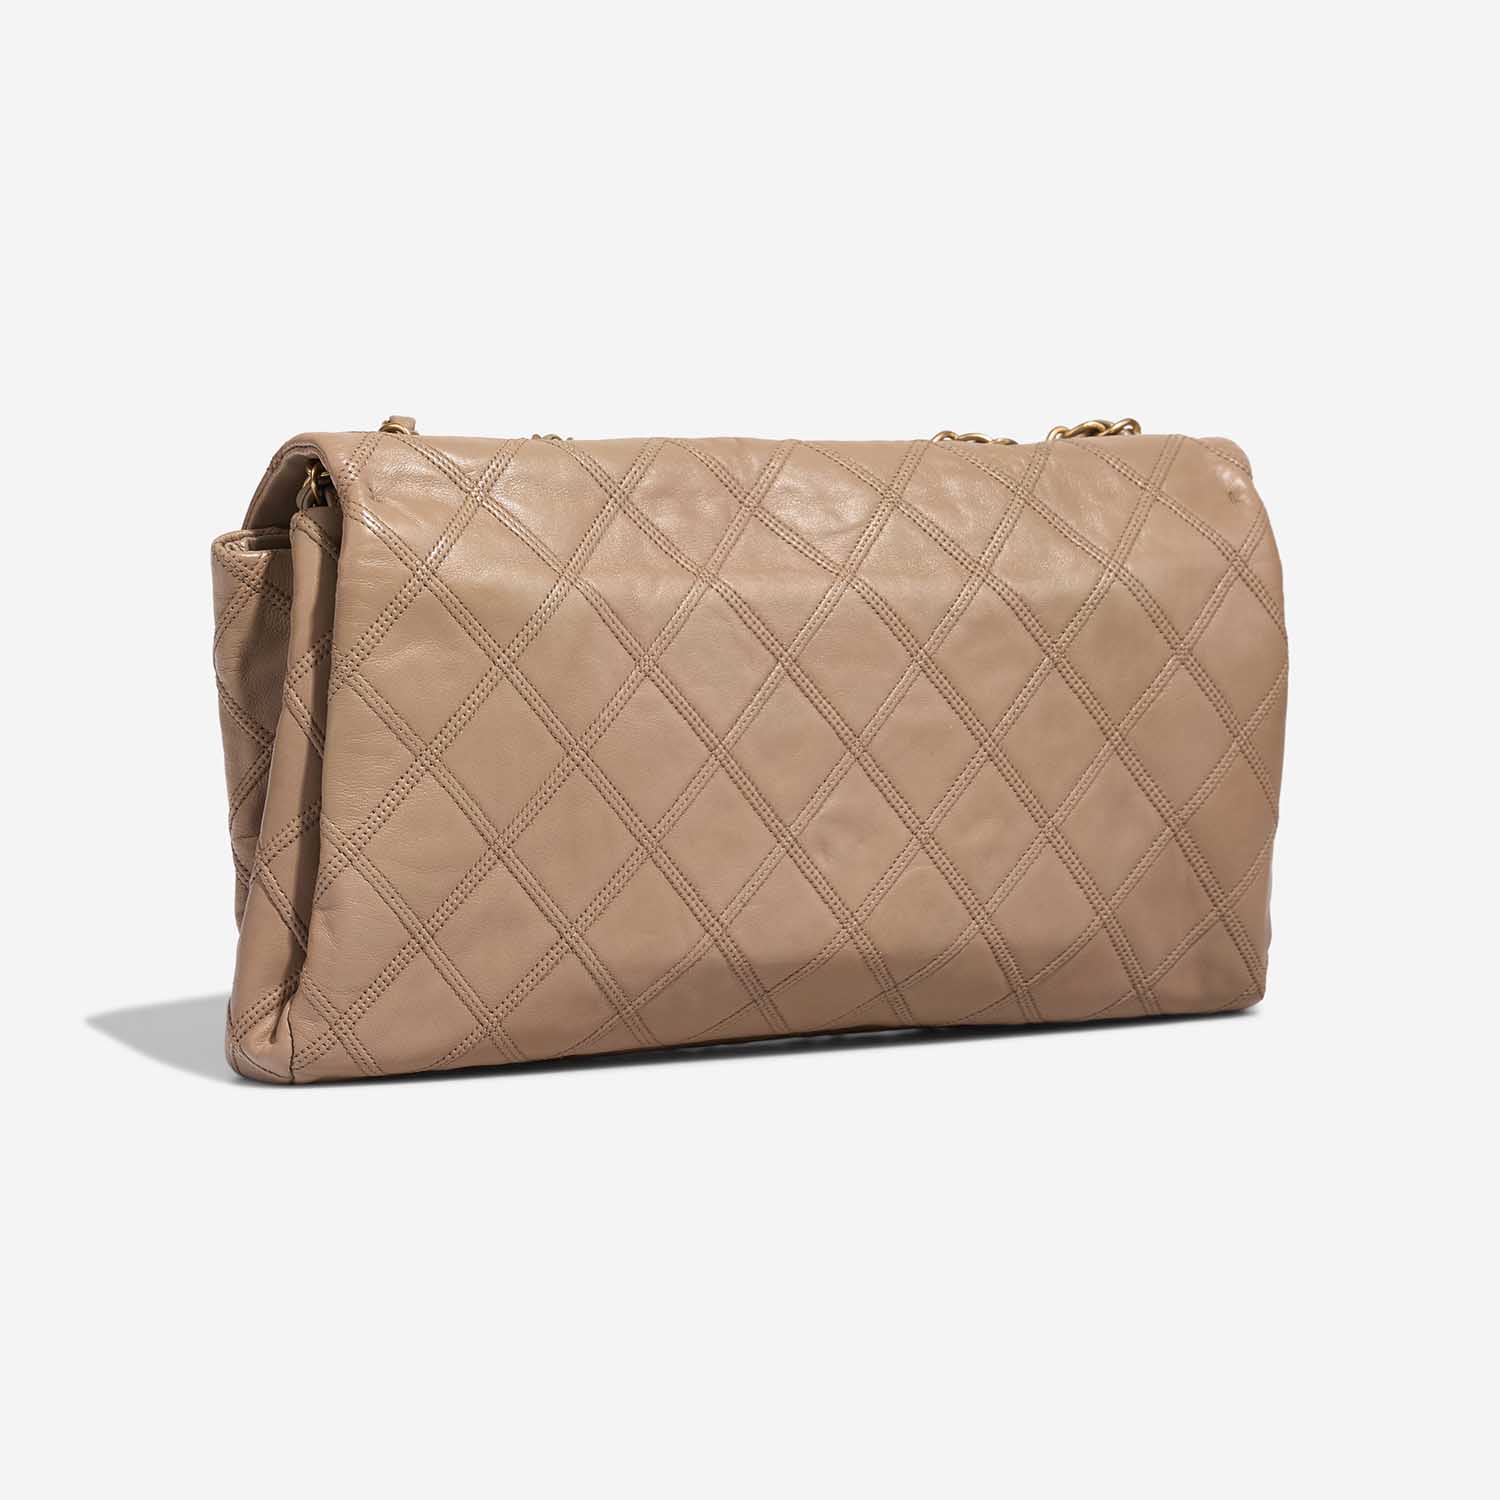 Chanel Timeless Jumbo Beige Side Back | Sell your designer bag on Saclab.com